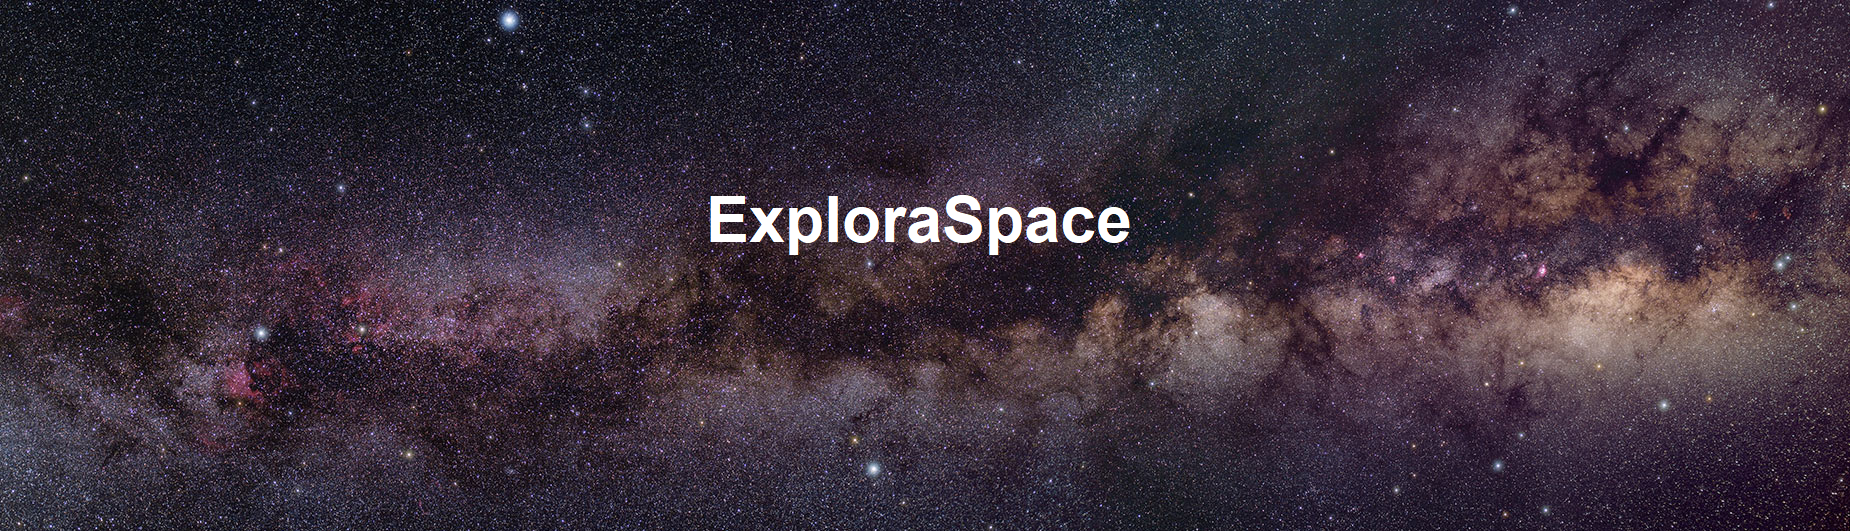 ExploraSpace